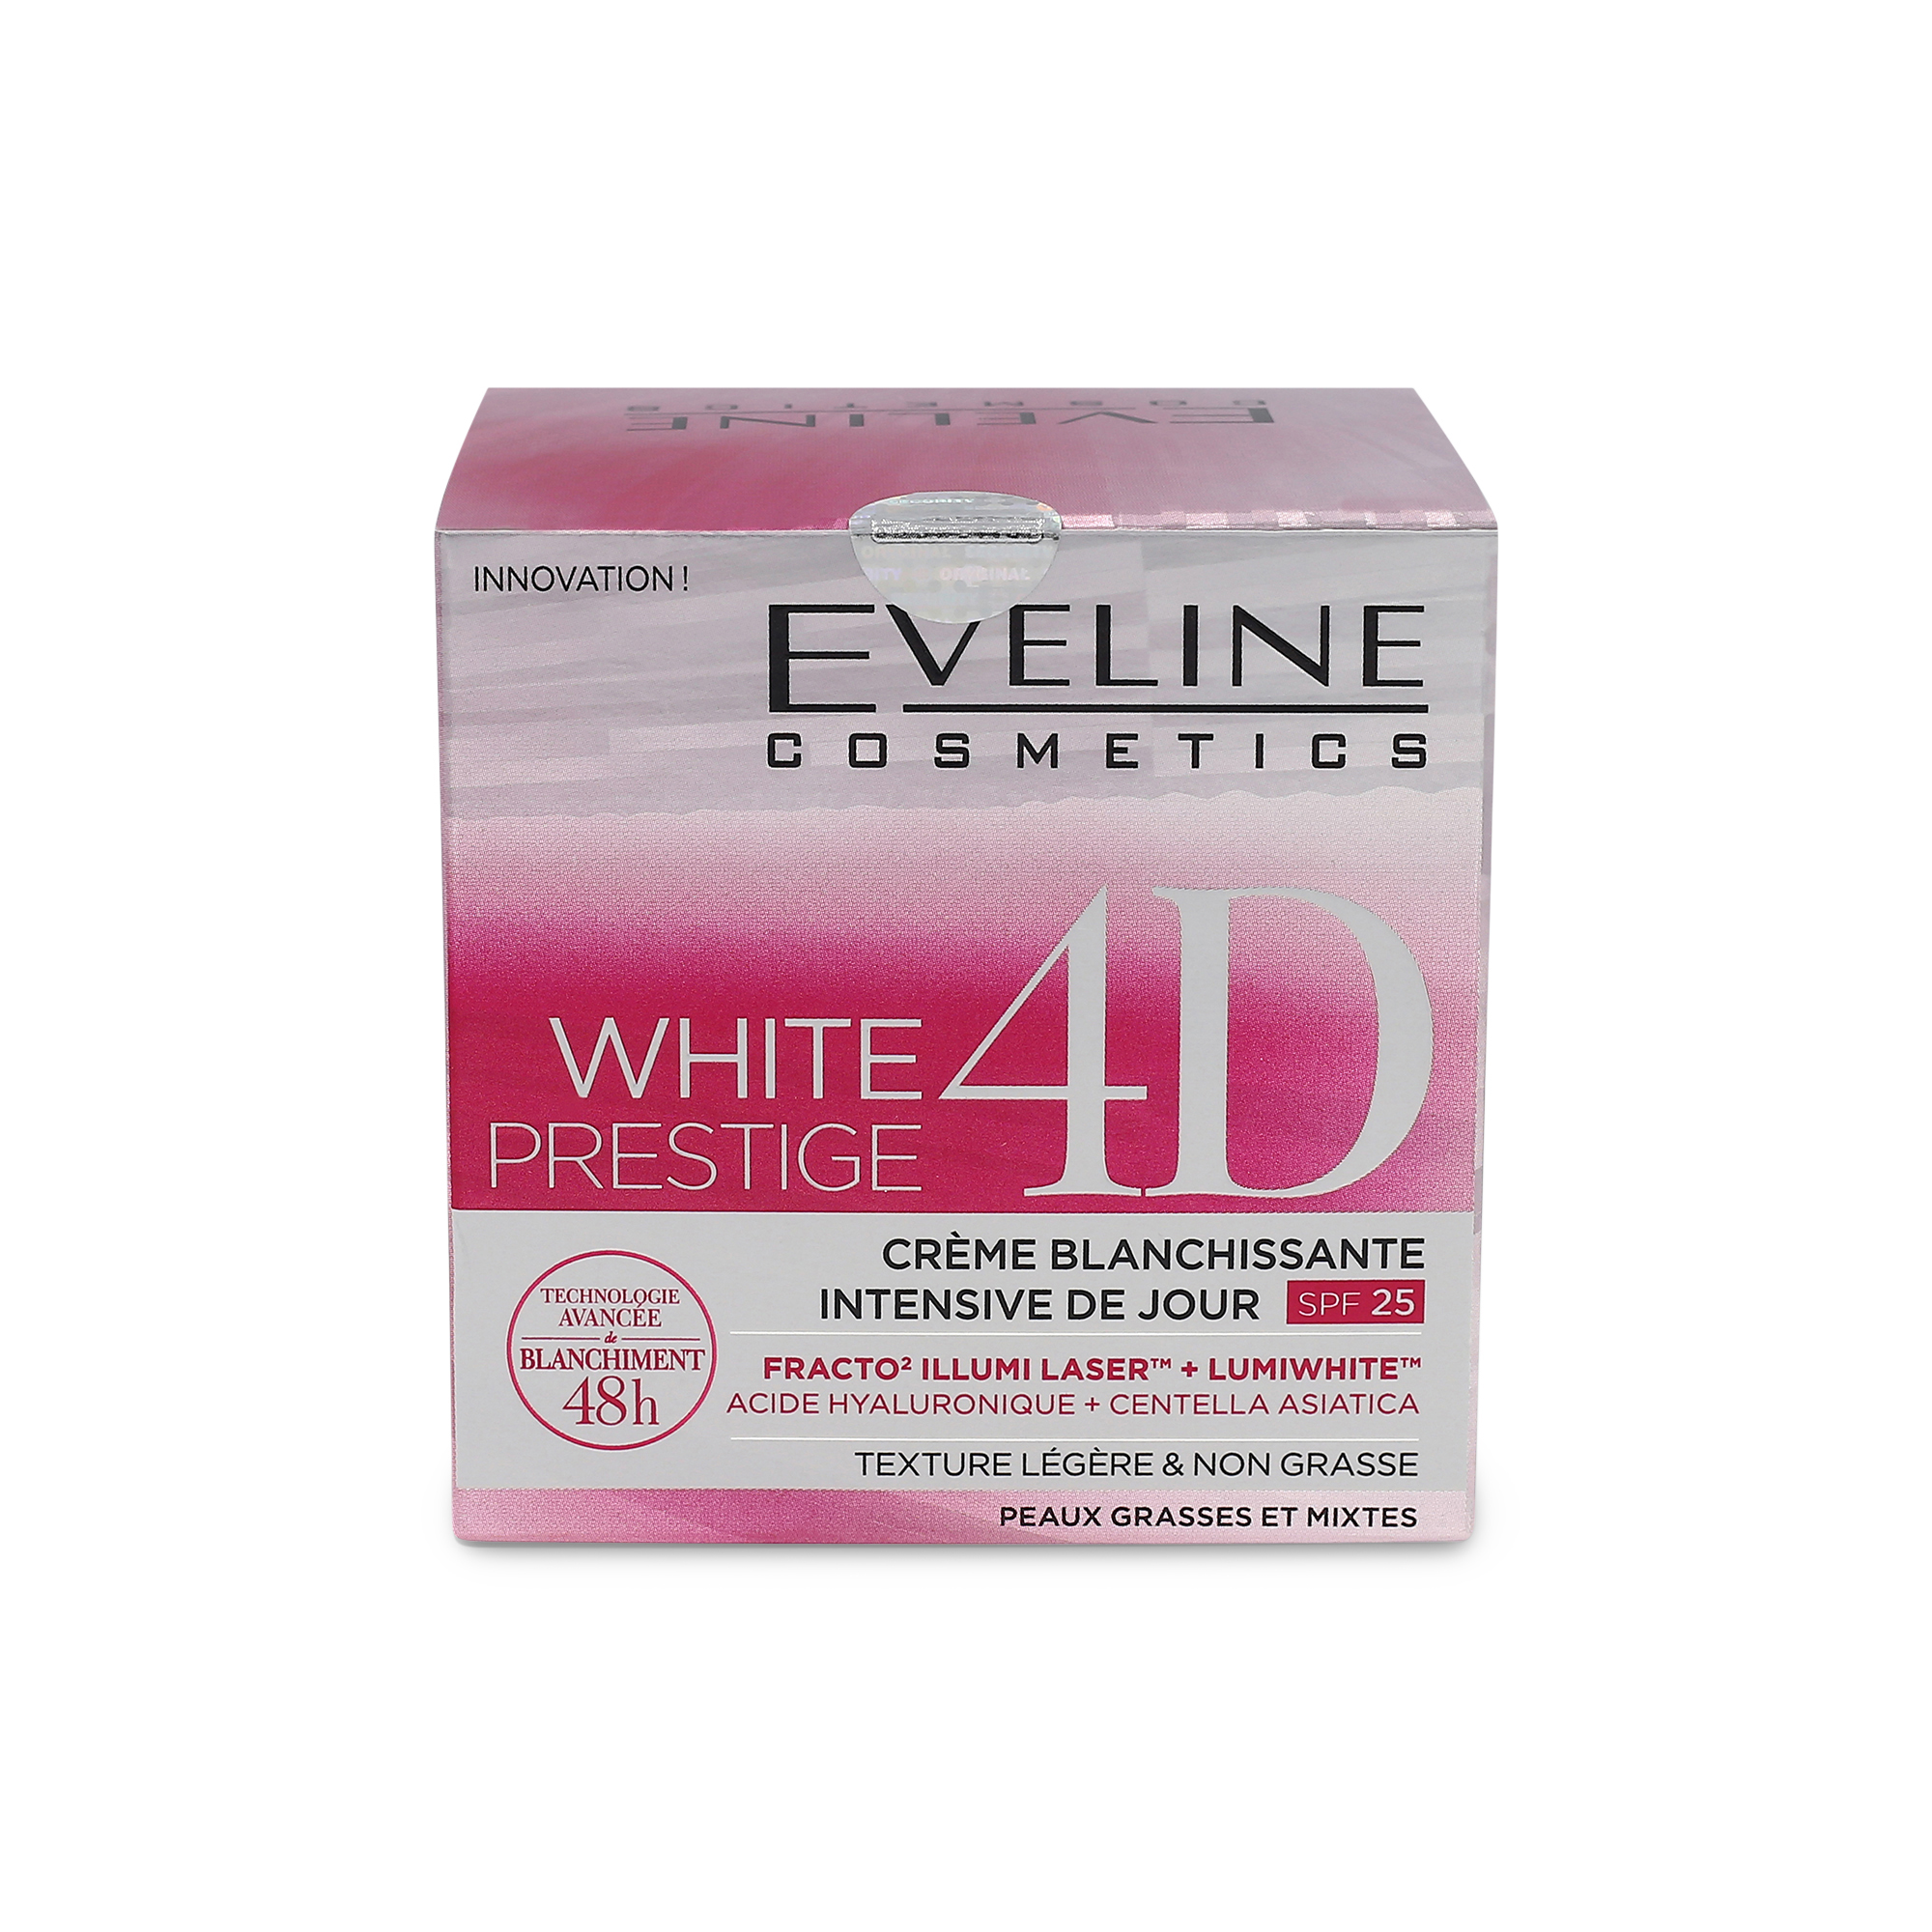 White Prestige 4D Whitening and Regenerating Day Cream